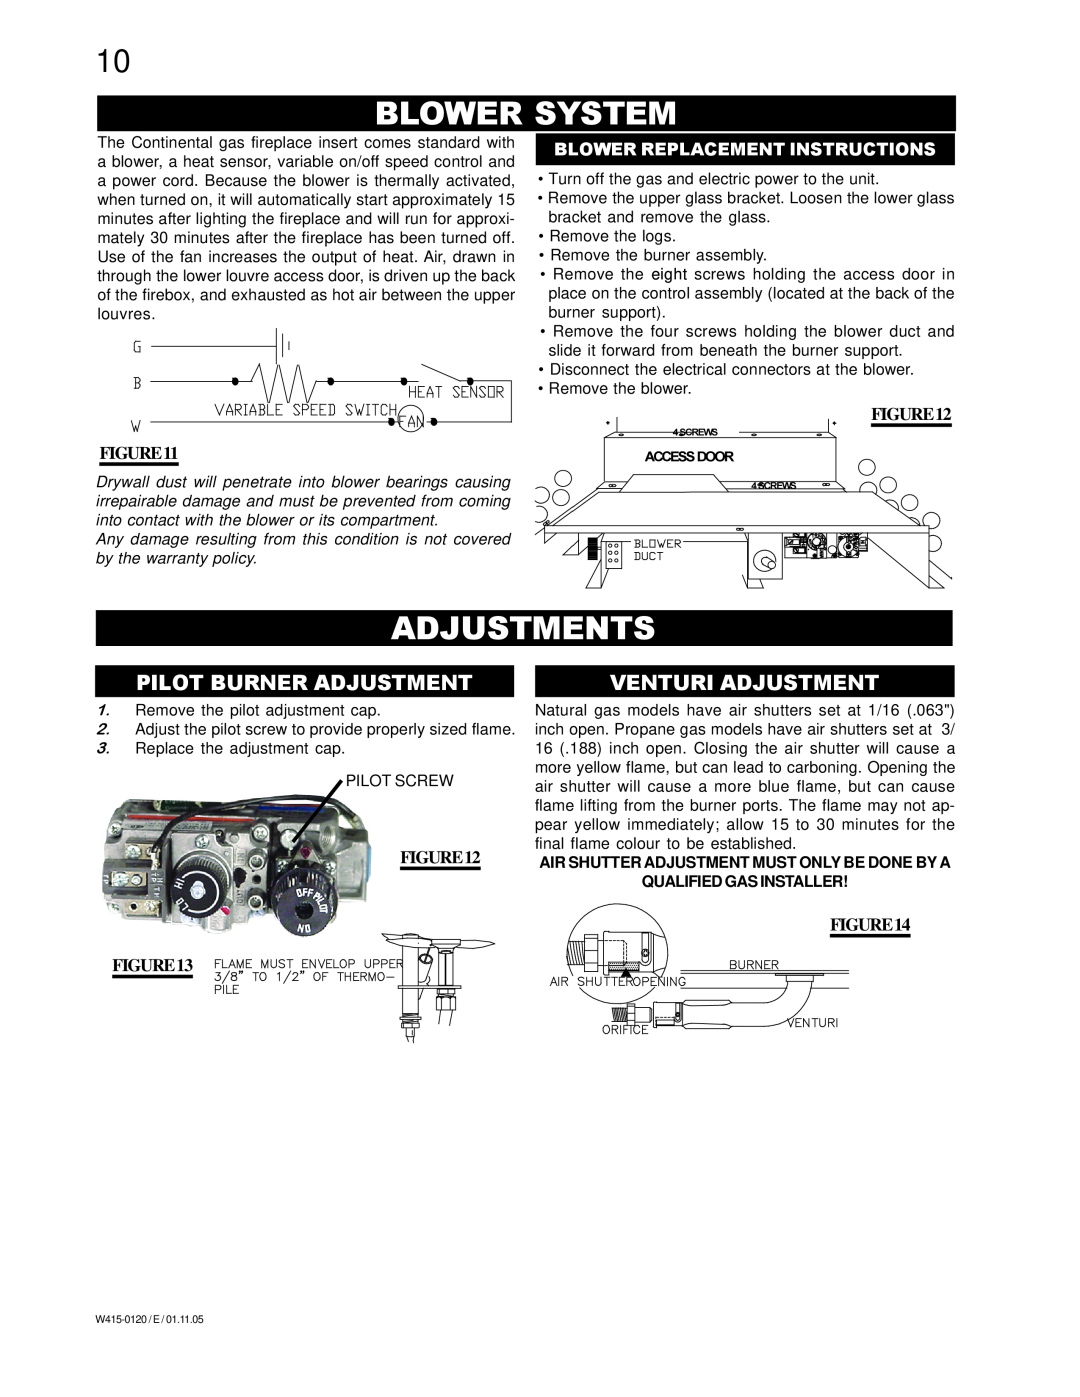 Continental CBI 360-P, CBI 360-N manual Blower System, Adjustments, Pilot Burner Adjustment, Venturi Adjustment 